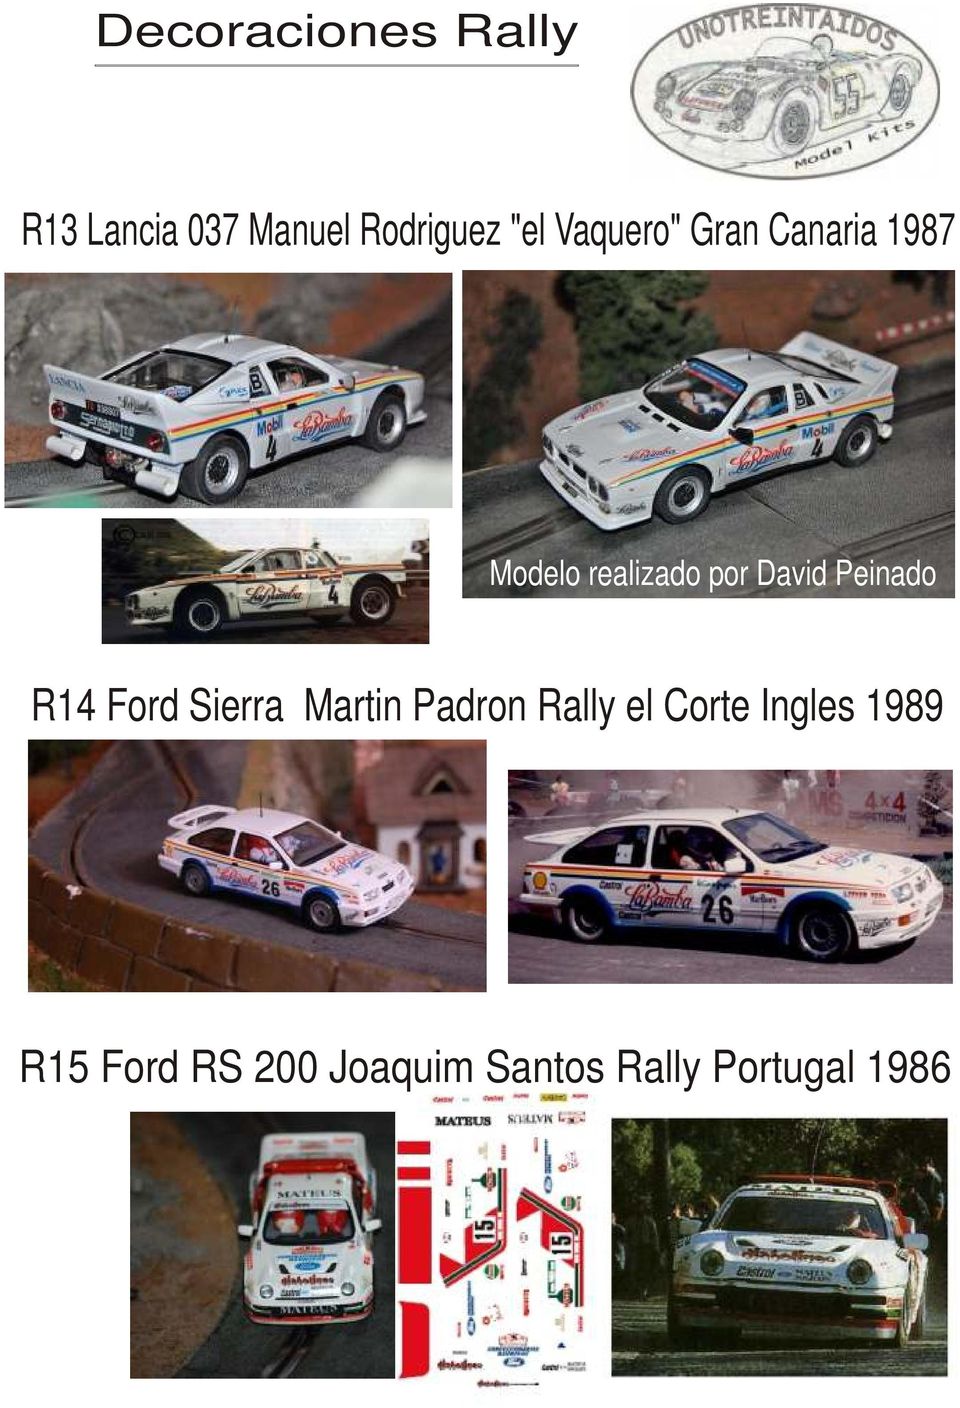 Ford Sierra Martin Padron Rally el Corte Ingles